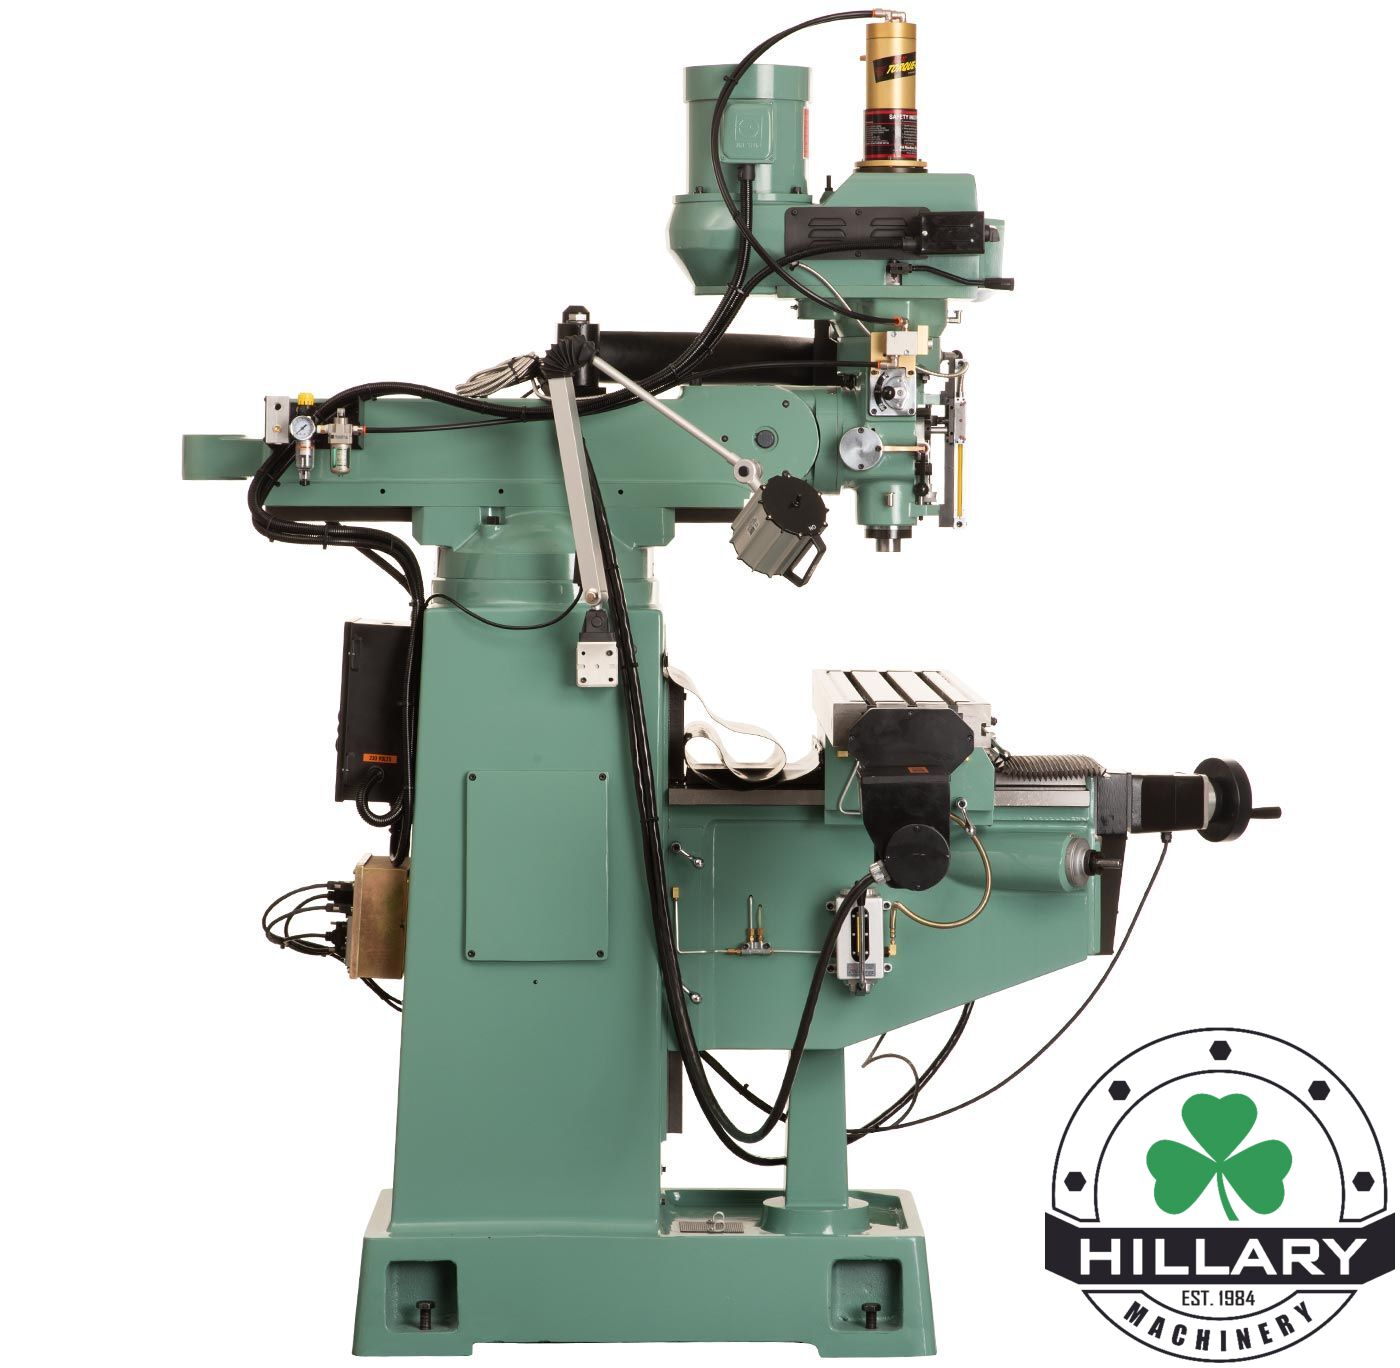 TRAK MACHINE TOOLS TRAK K3 Tool Room Mills | Hillary Machinery